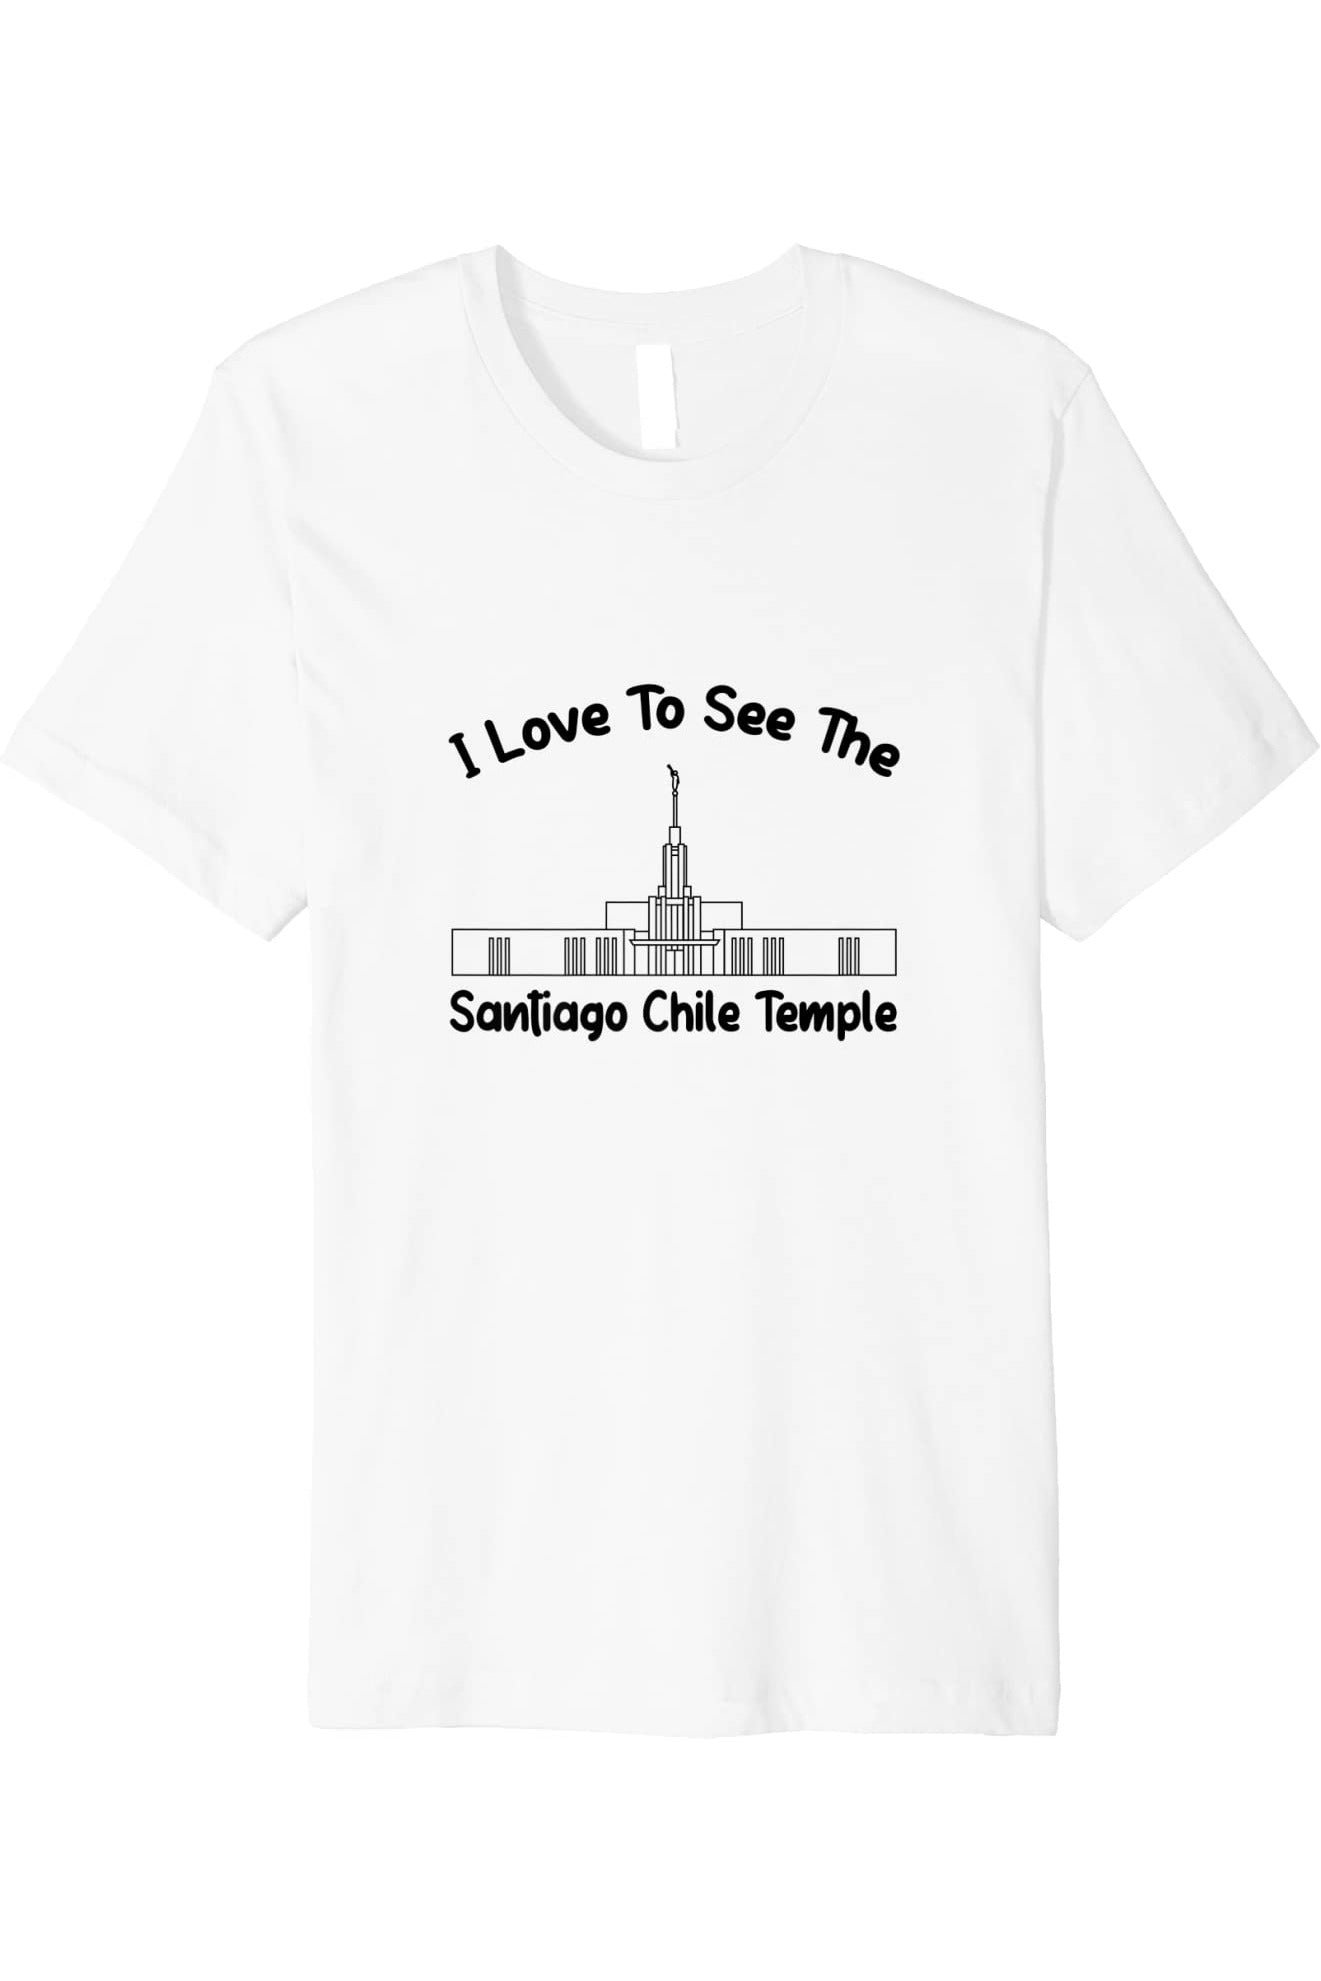 Santiago Chile Temple T-Shirt - Premium - Primary Style (English) US